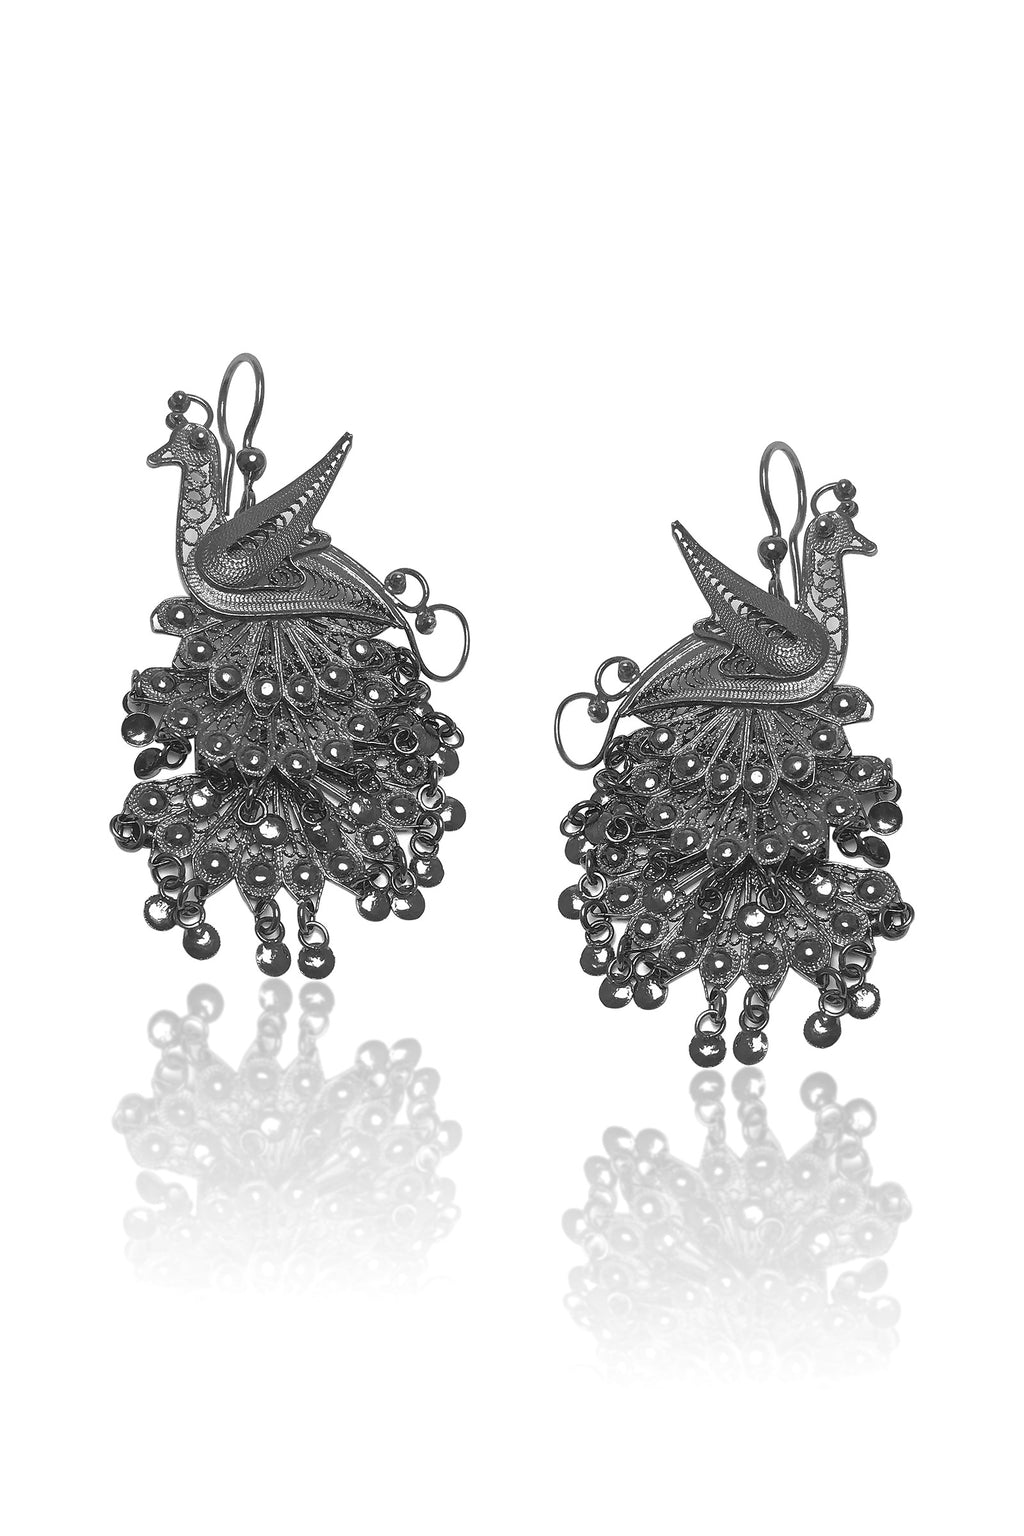 Peacocks Model Oxidized Filigree Silver Earrings (NG201017369)